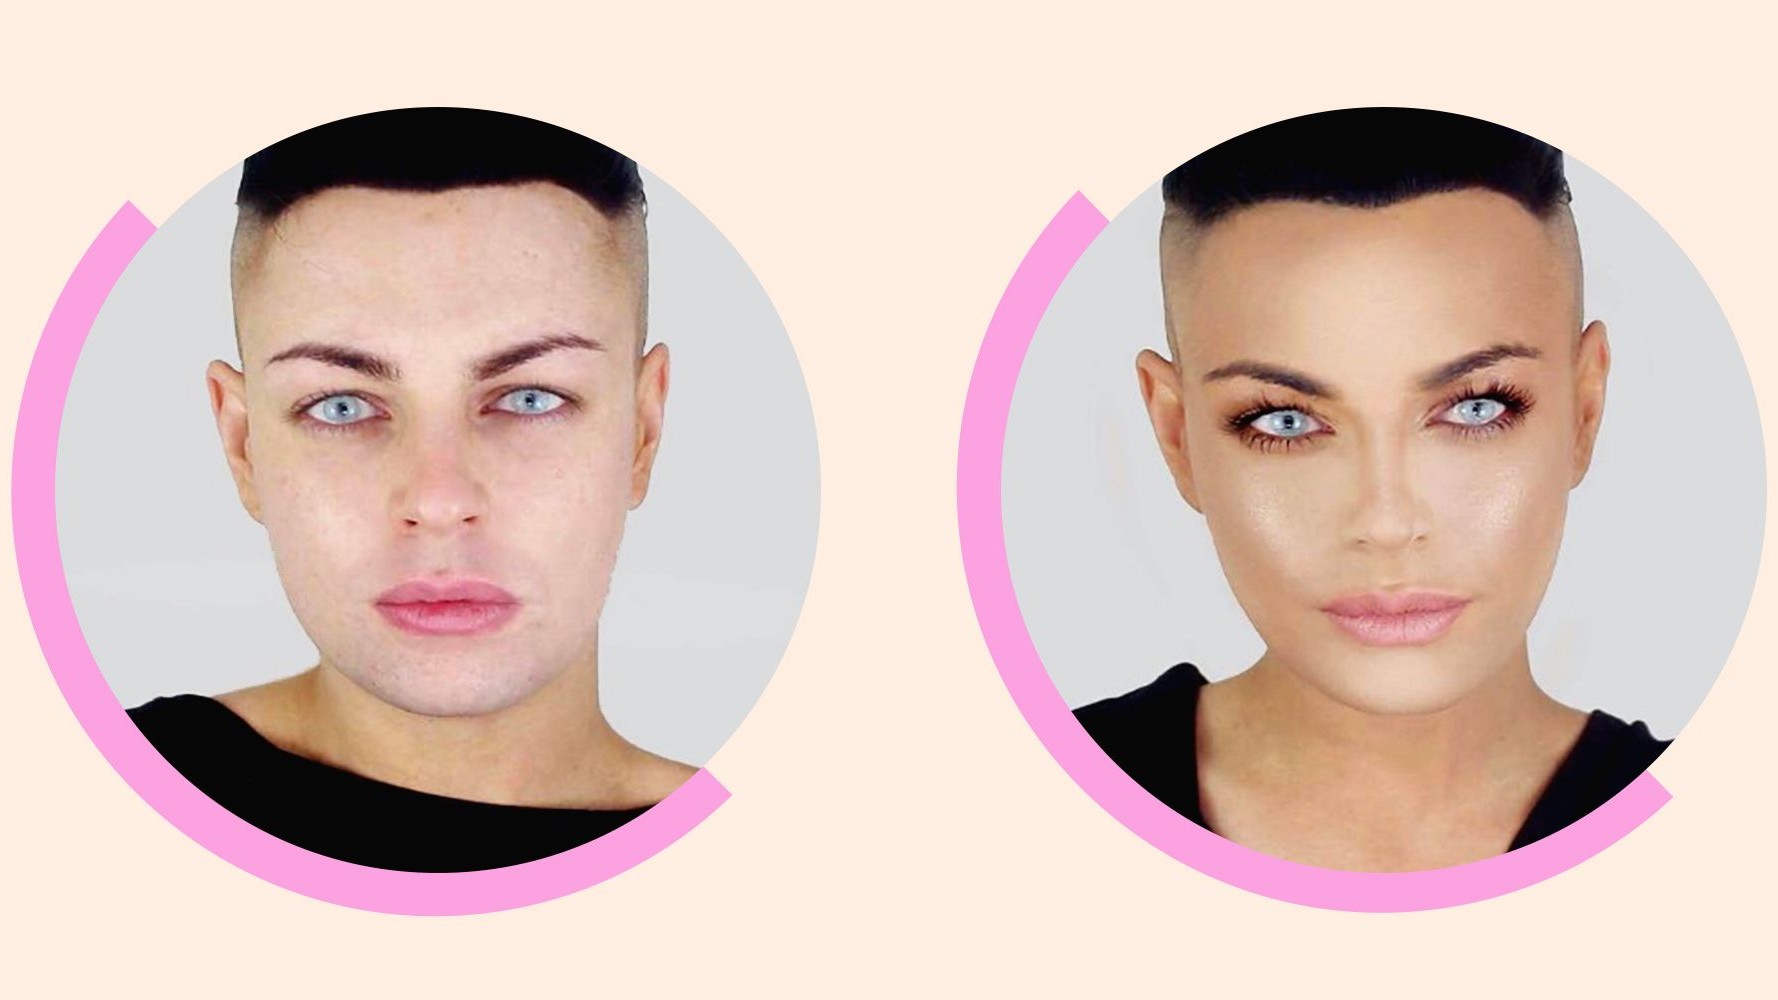 The 5 Best Makeup Tricks for Transgender Women - How to do Facial